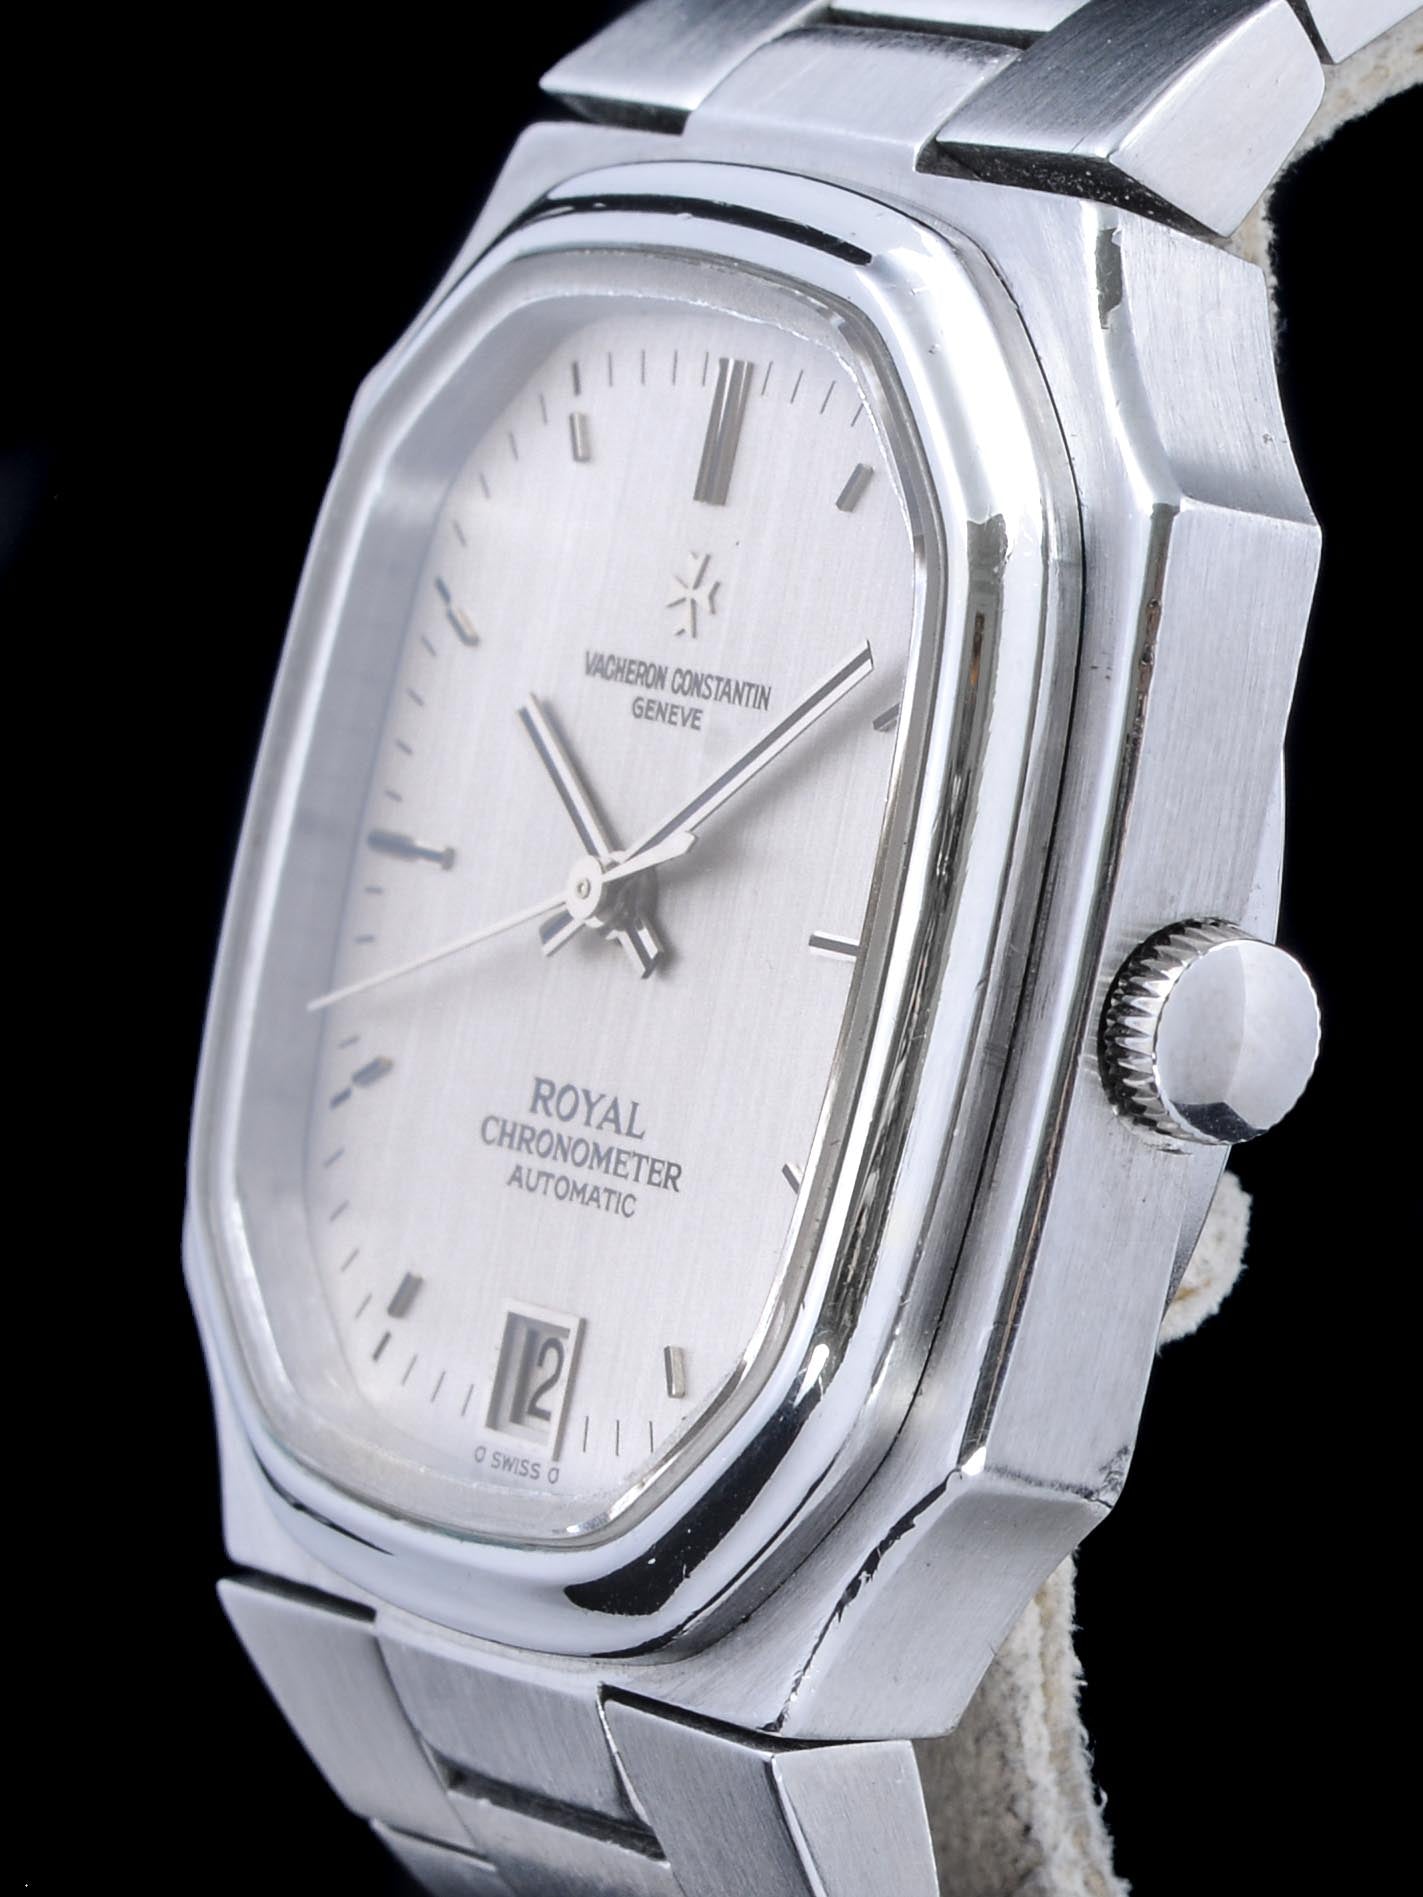 1976 Vacheron Constantin Royal Chronometre (Ref. 2215) W/ Extract From